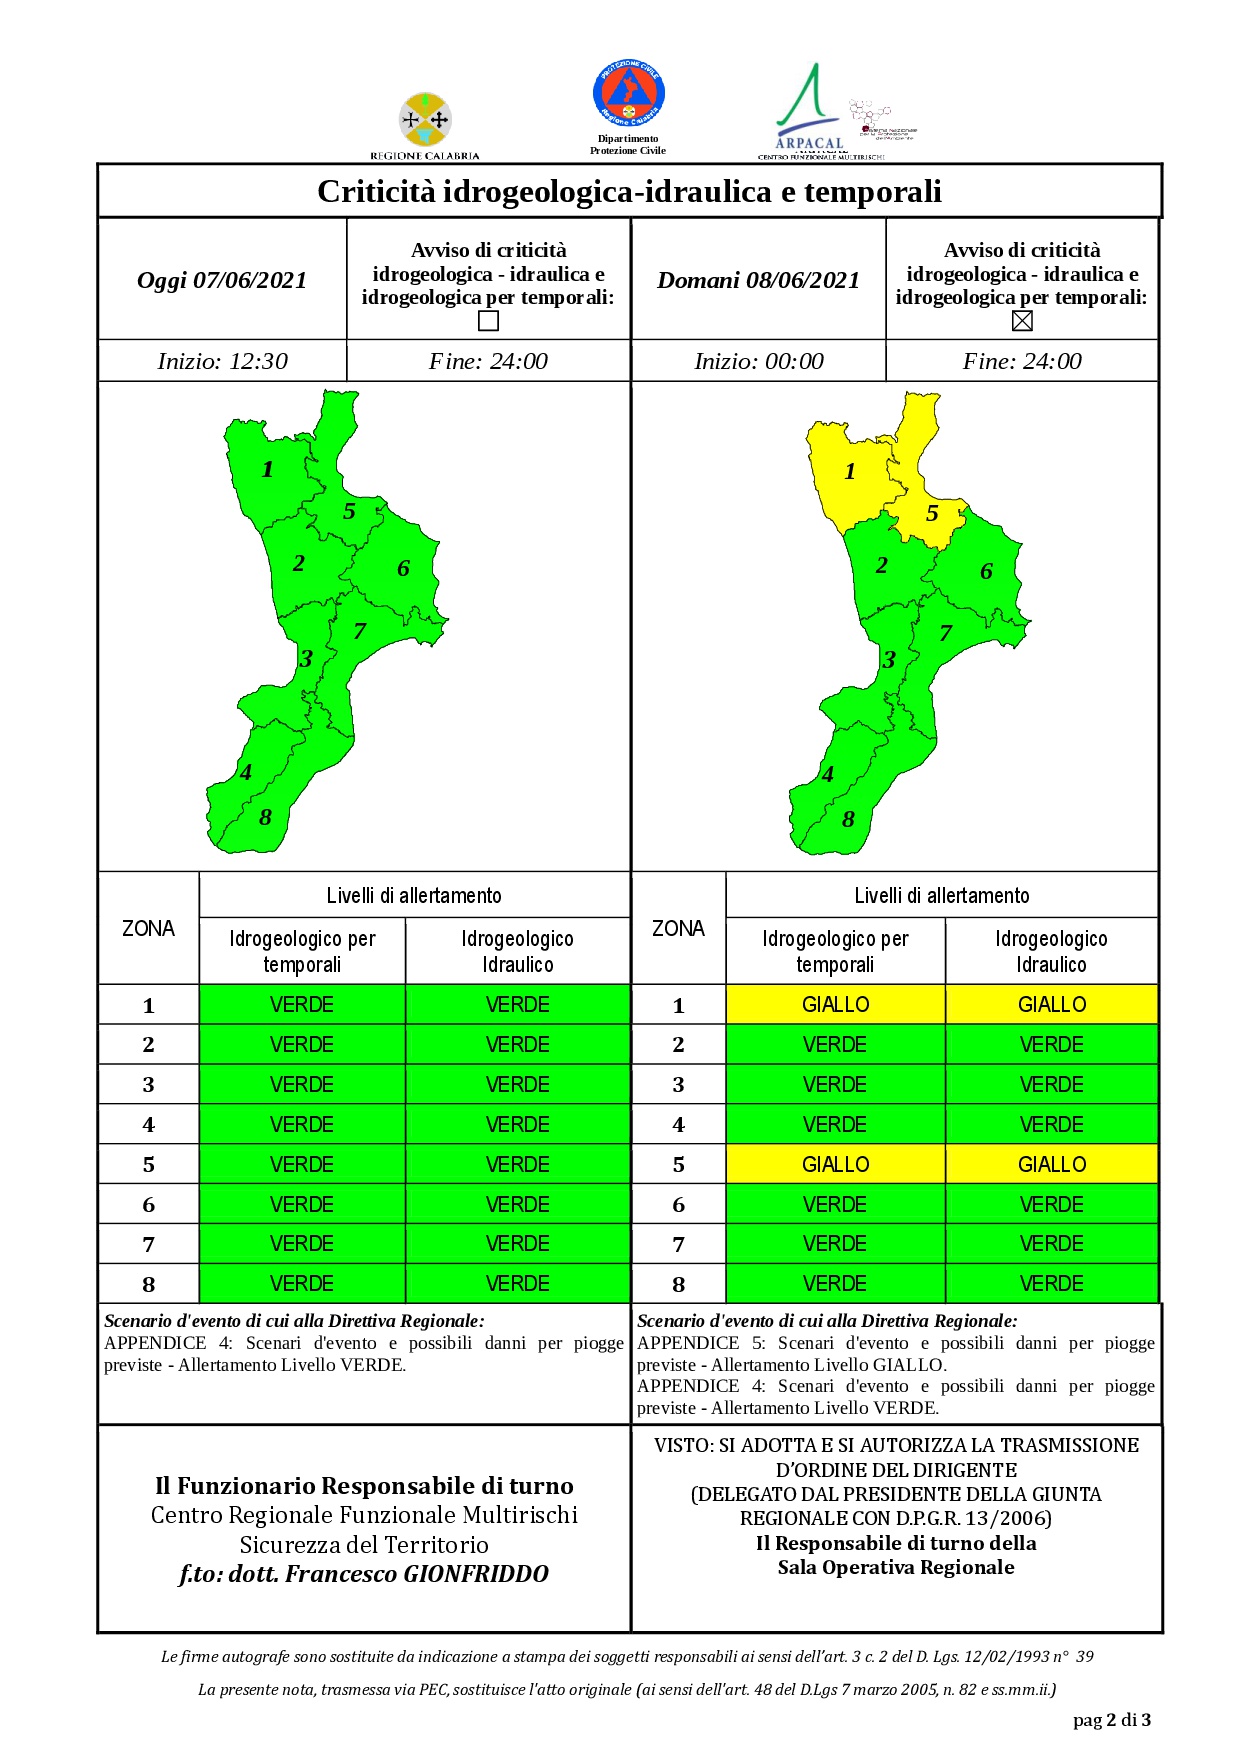 Criticità idrogeologica-idraulica e temporali in Calabria 07-06-2021